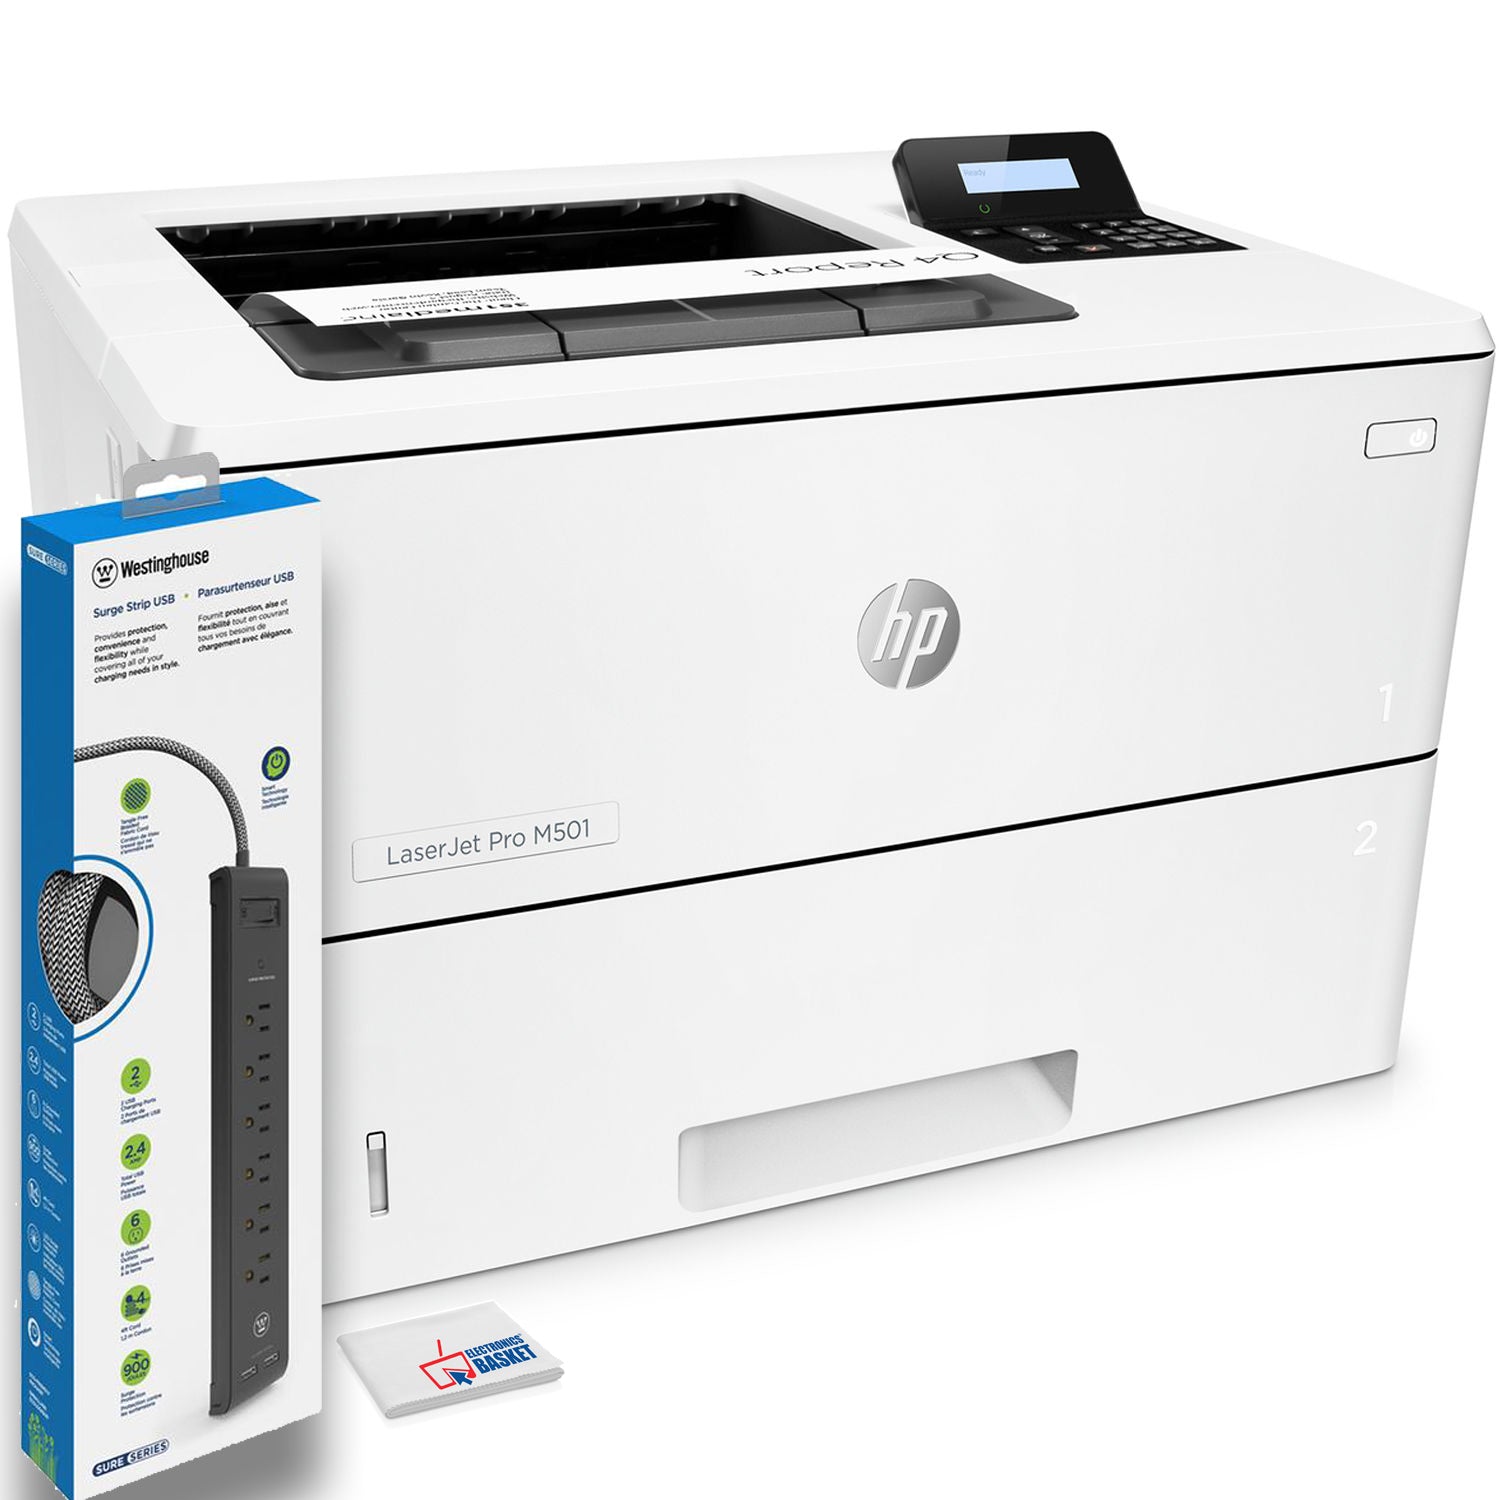 HP LaserJet Pro M501dn Monochrome Laser Printer (J8H61A) With Power Strip Surge Protector